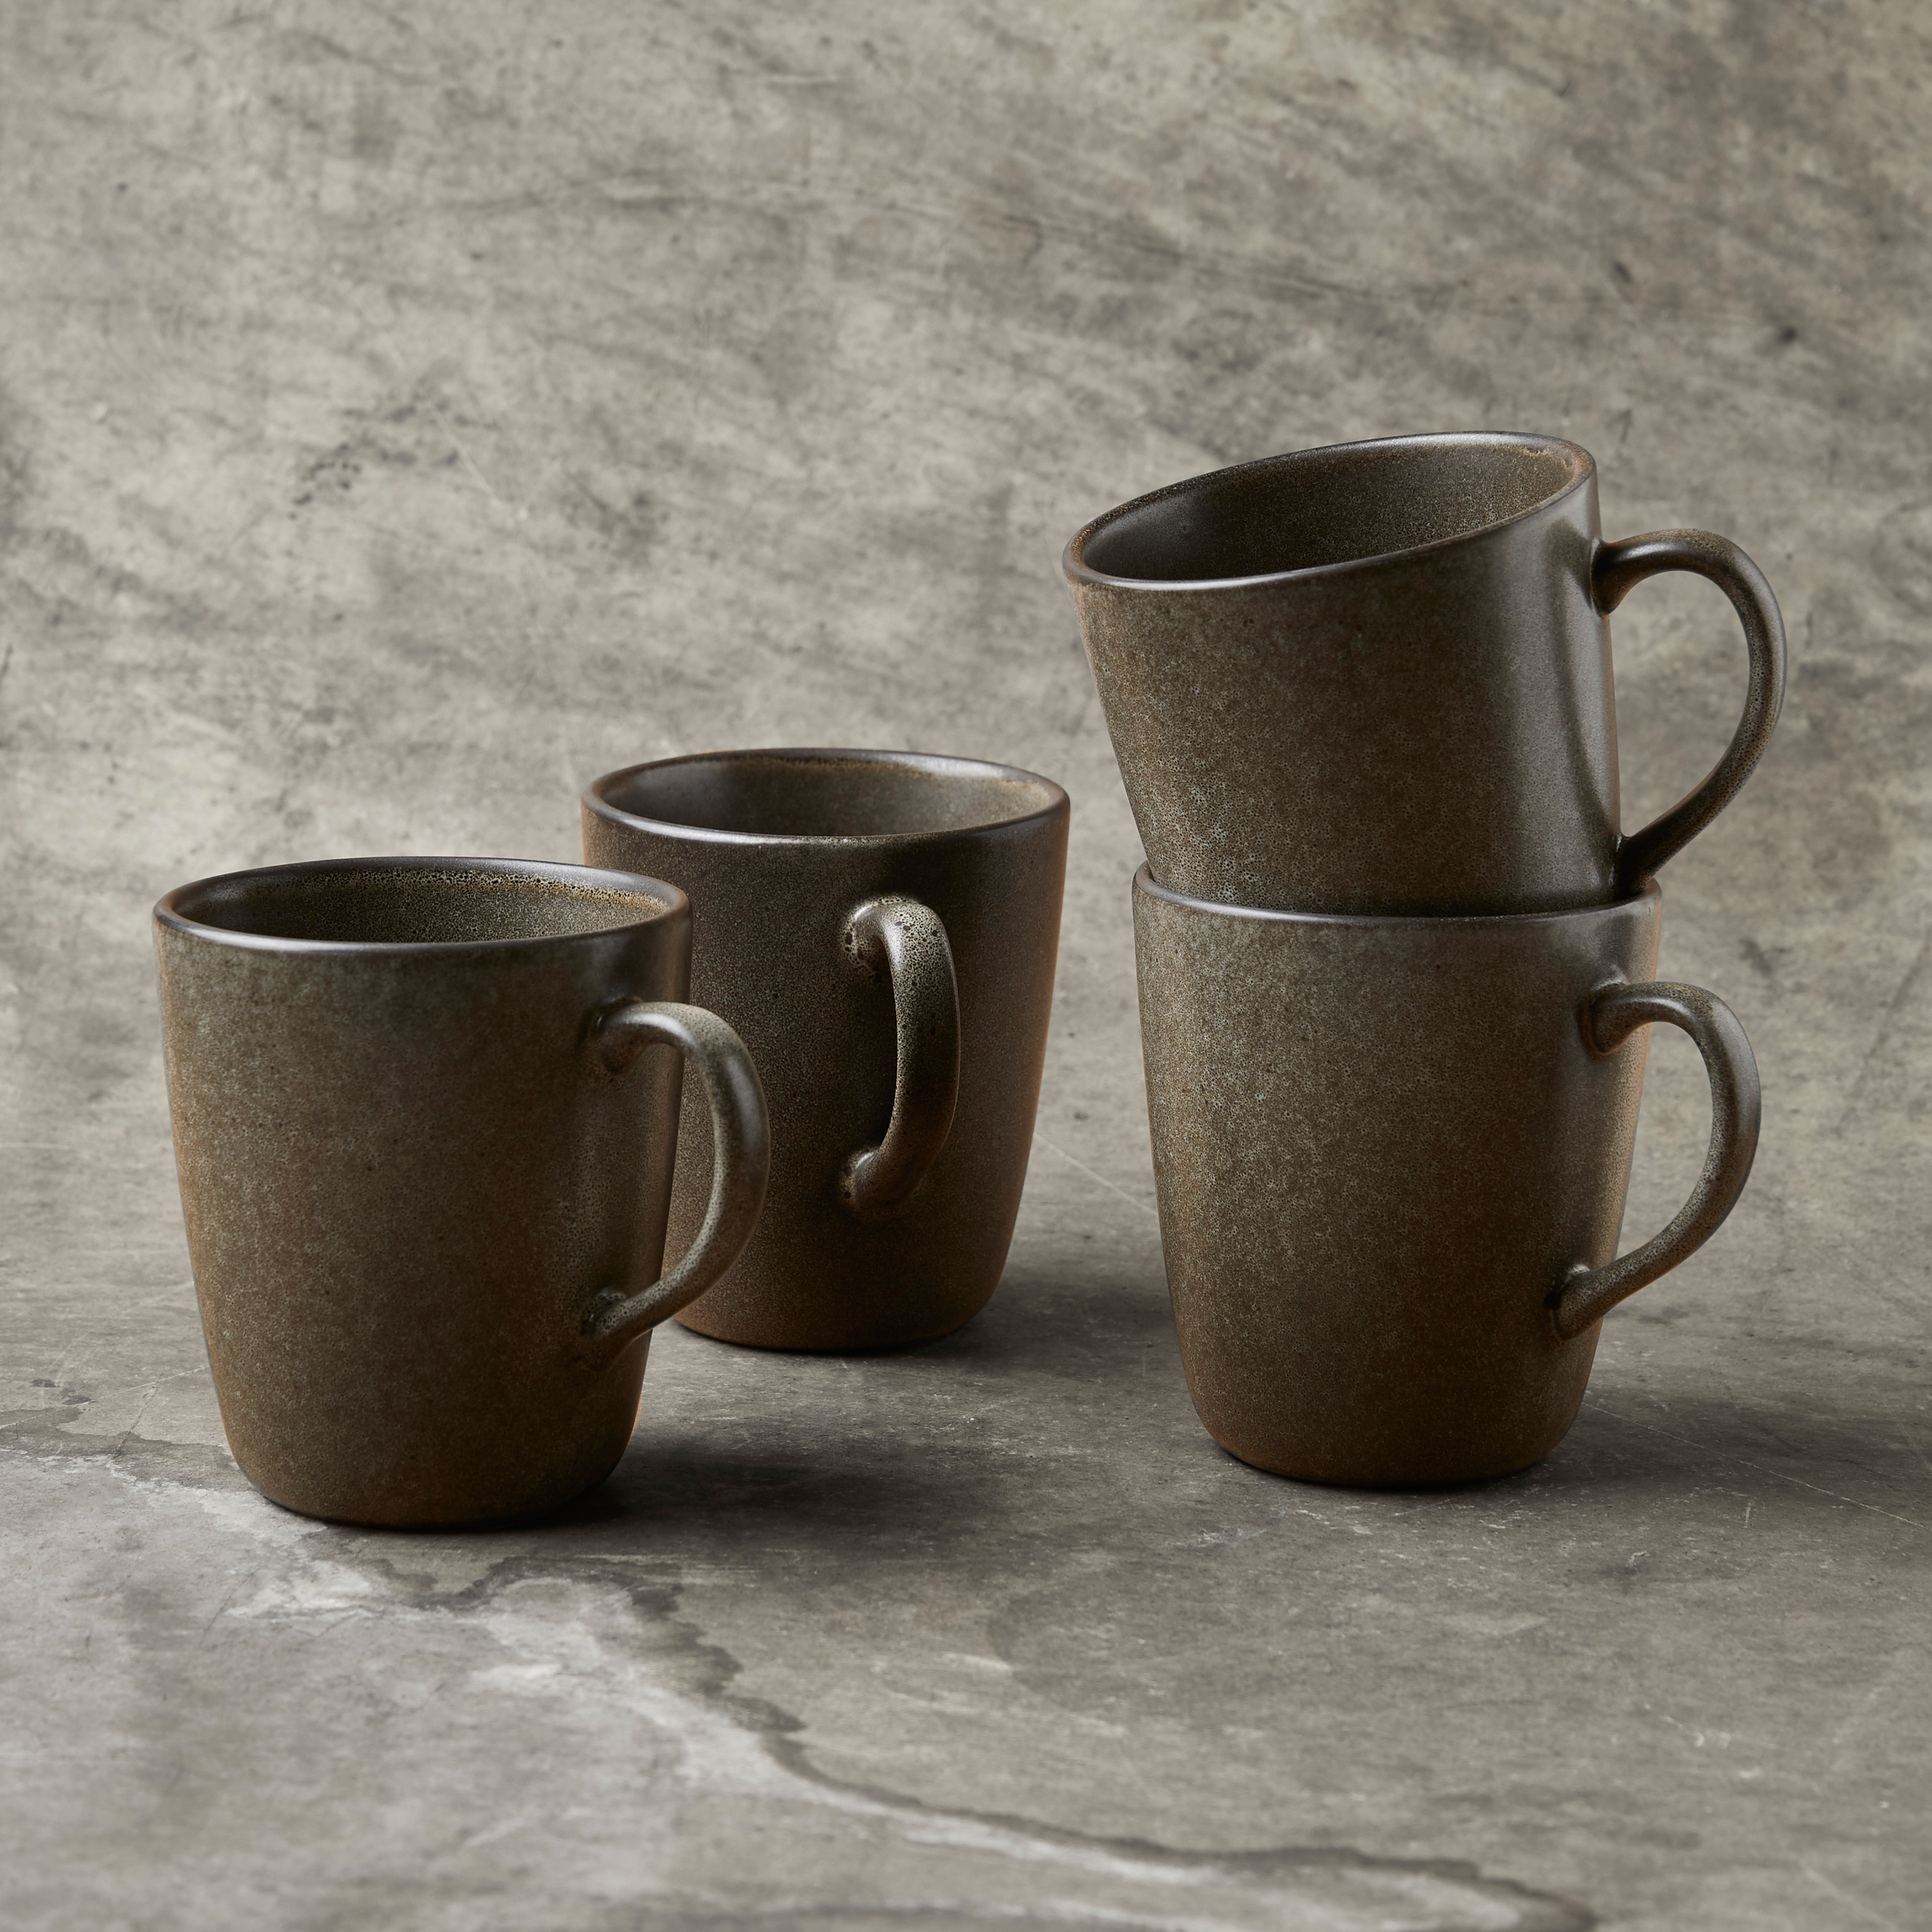 Raw mug with handle 35 cl from Aida